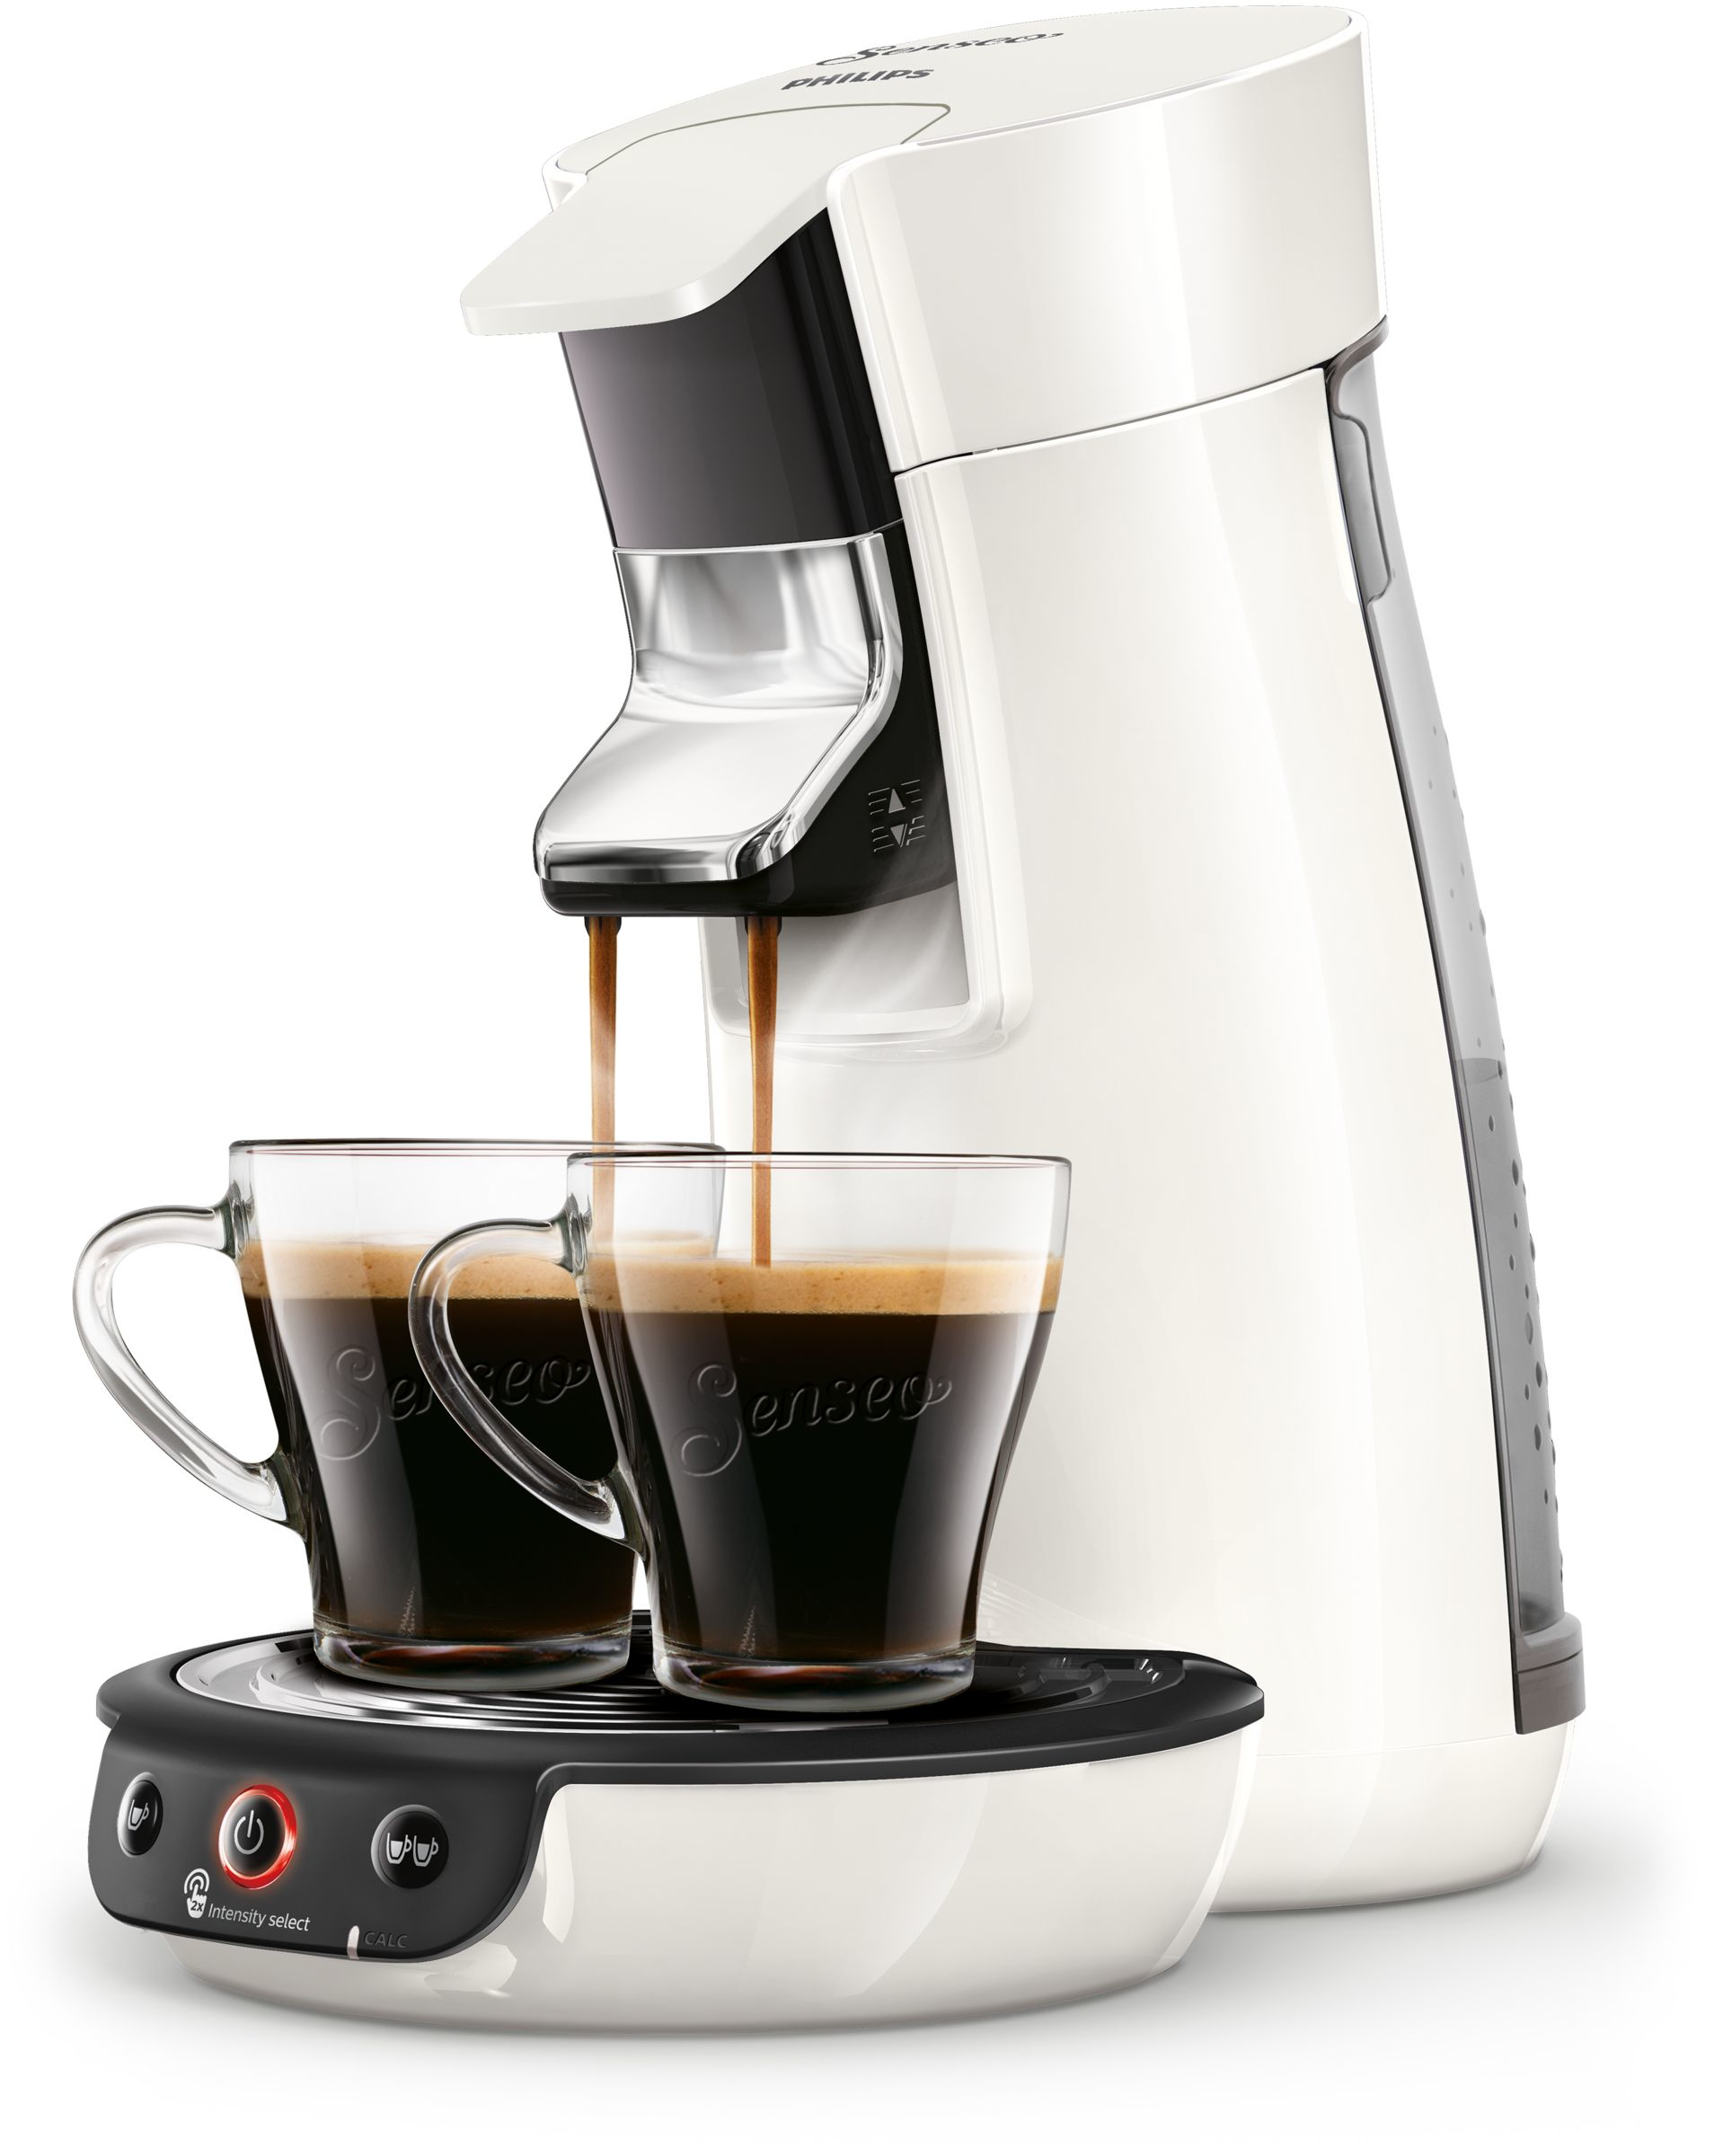 Senseo Viva Café HD6563/02 coffee maker